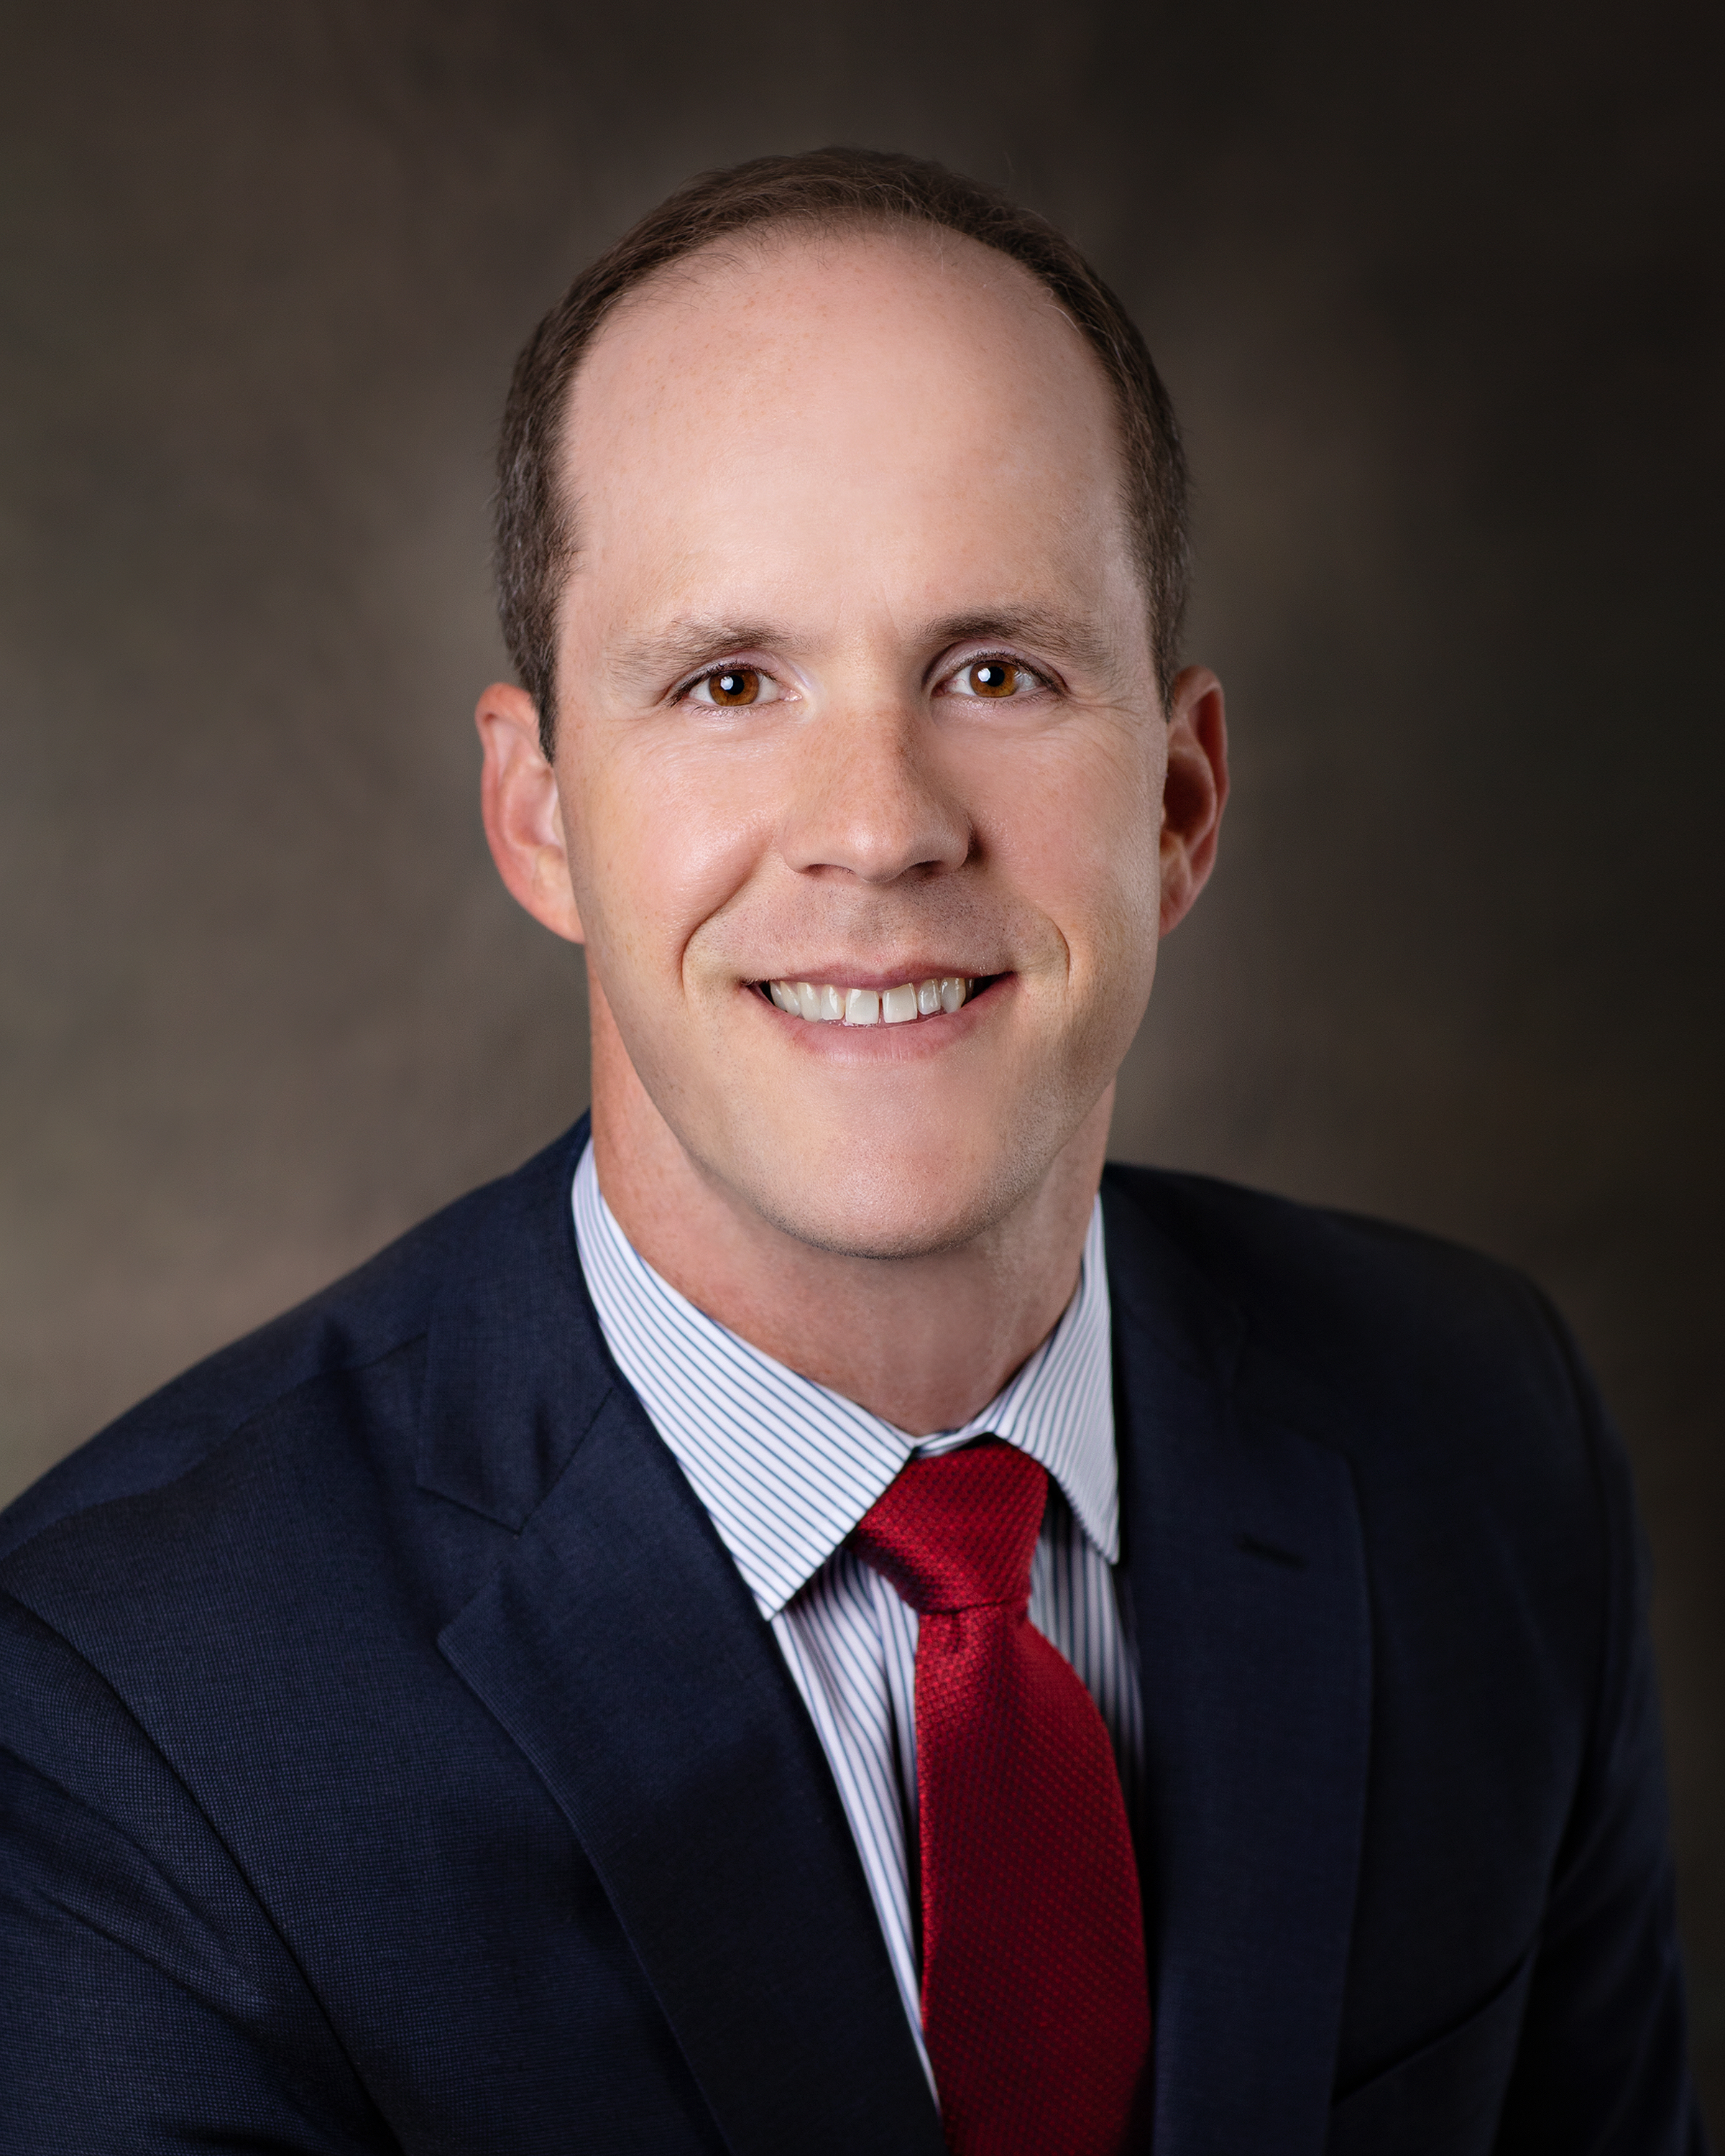 John R. Heintz
Vice President, Network Management
Regence BlueShield of Idaho